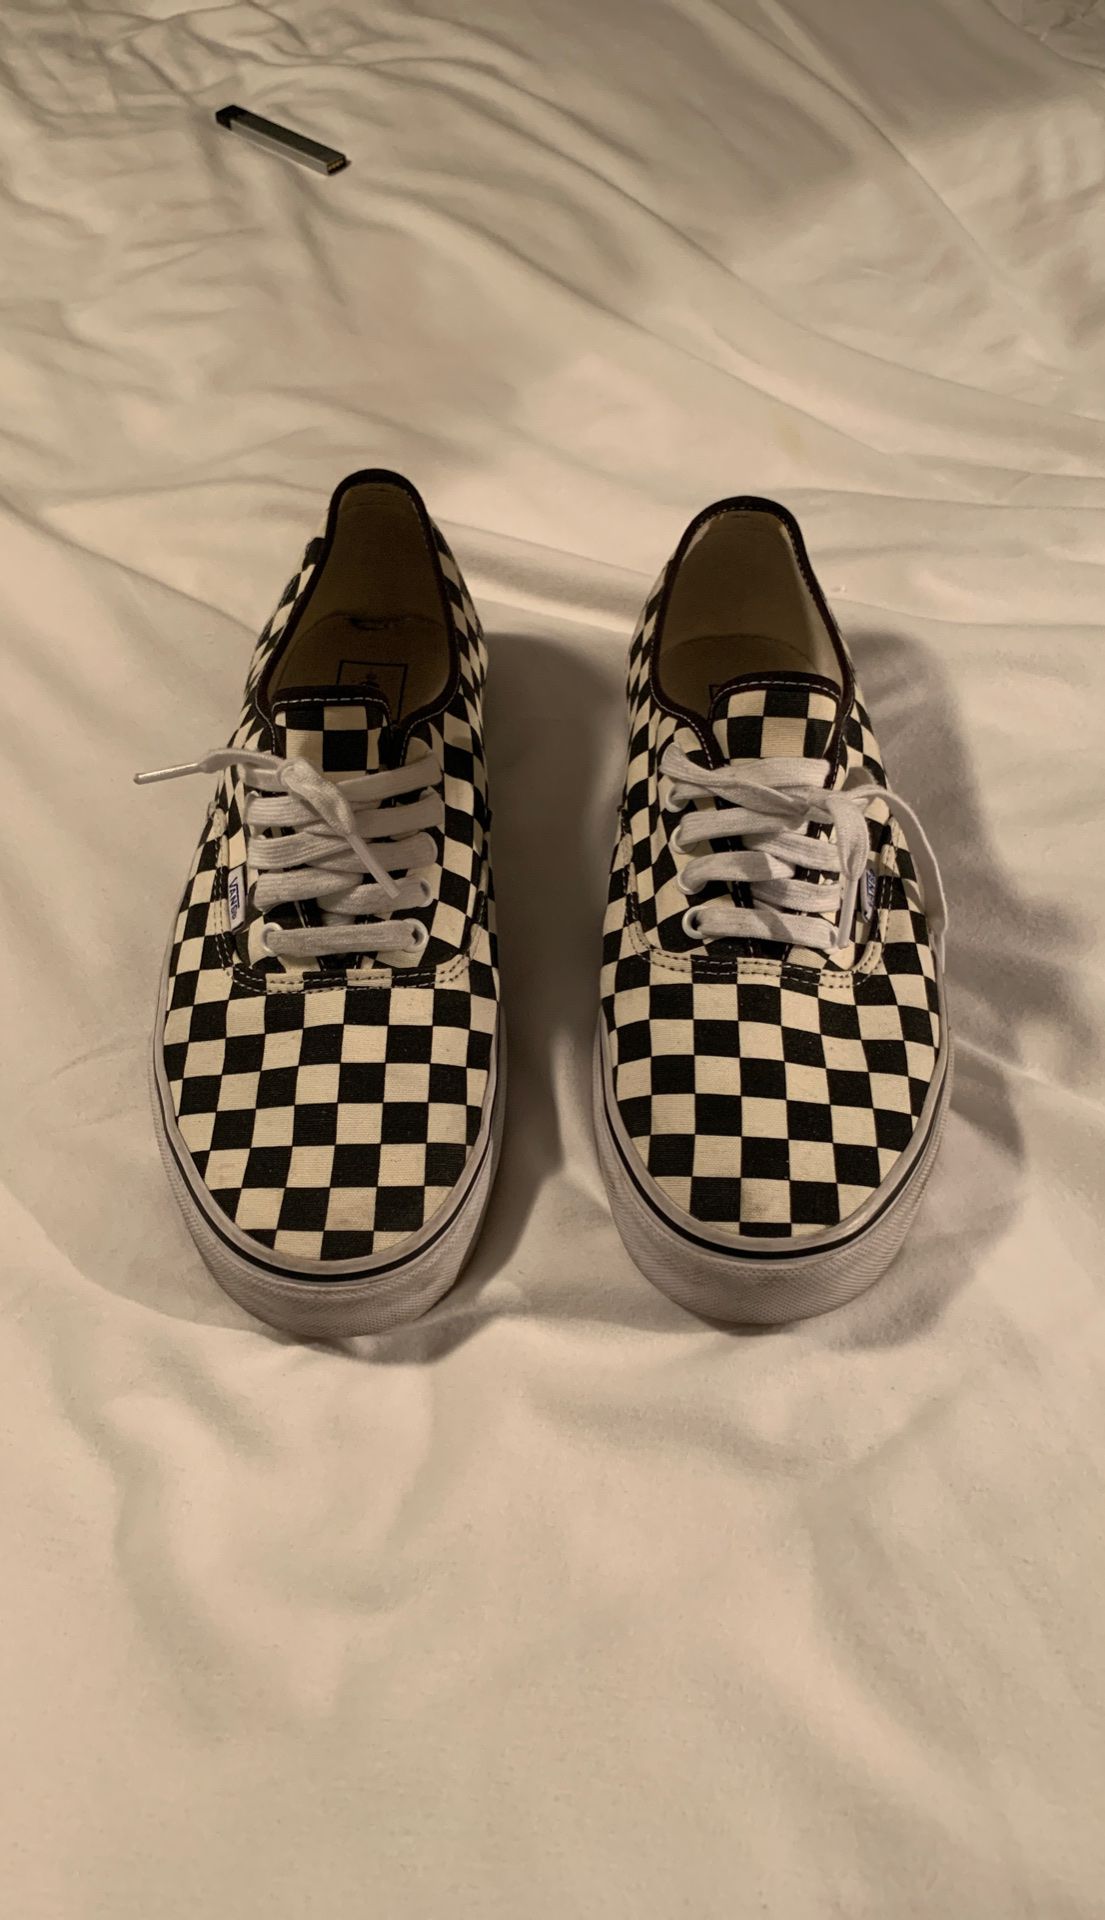 Checkered white/black Vans